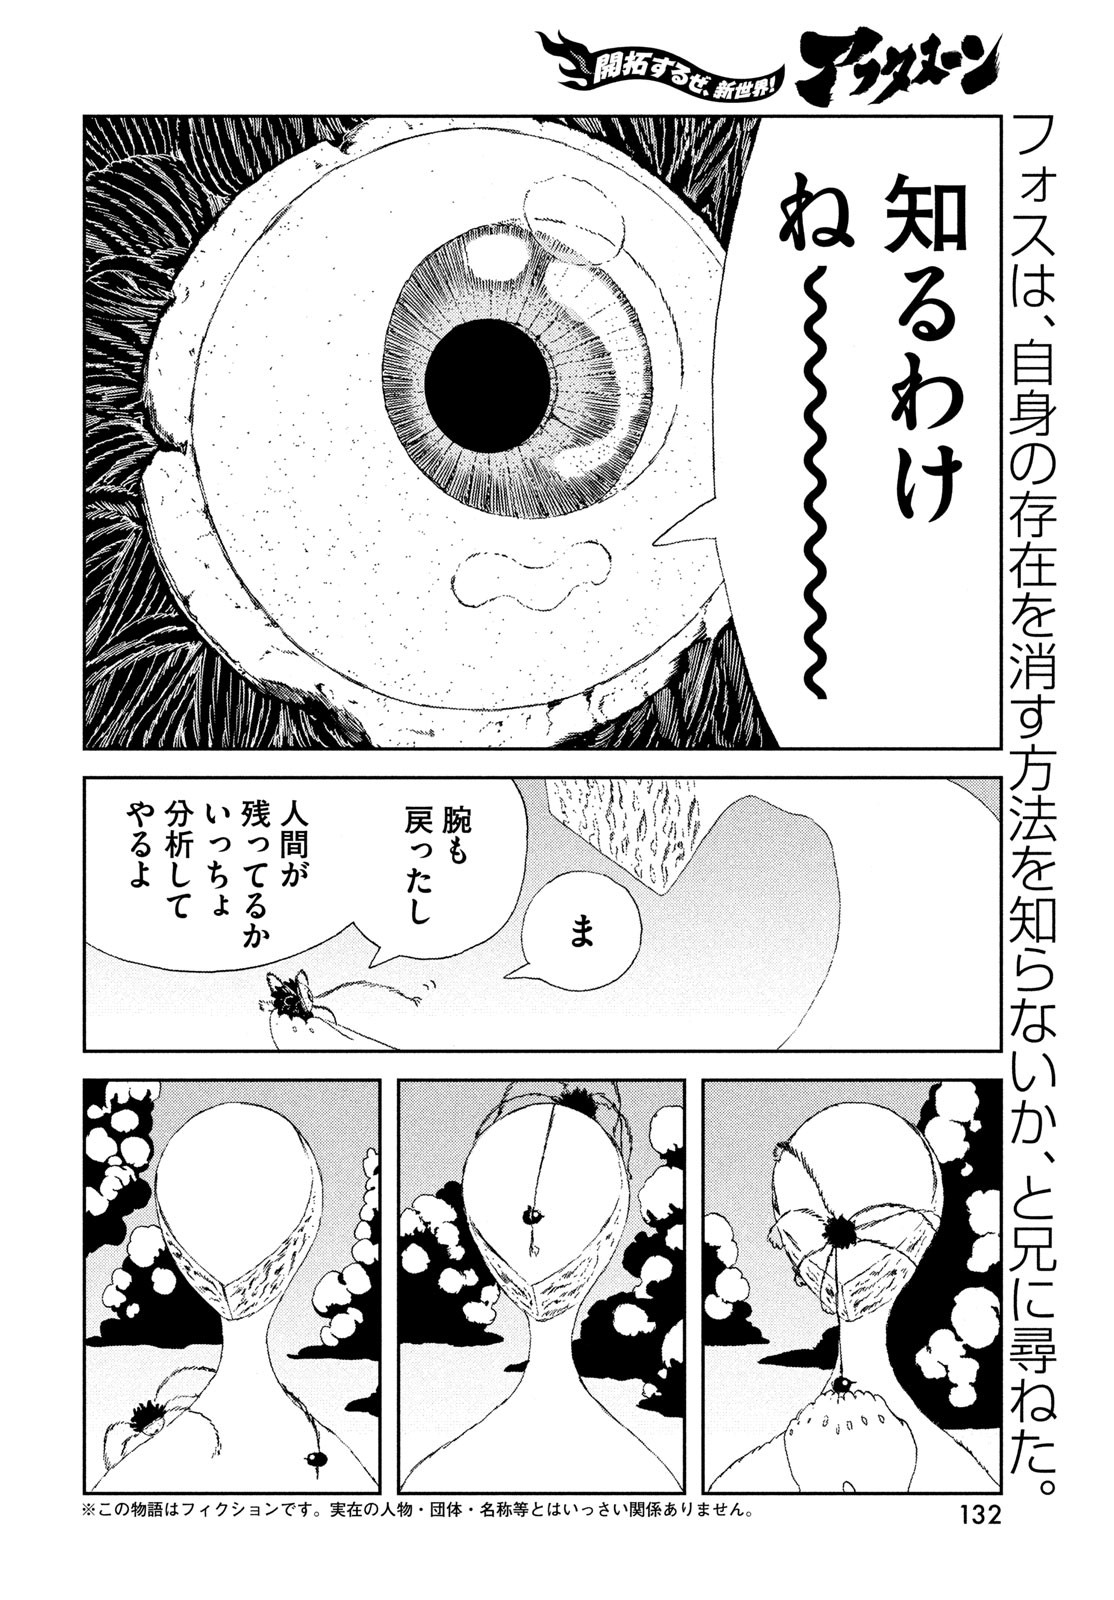 Houseki no Kuni - Chapter 103 - Page 2